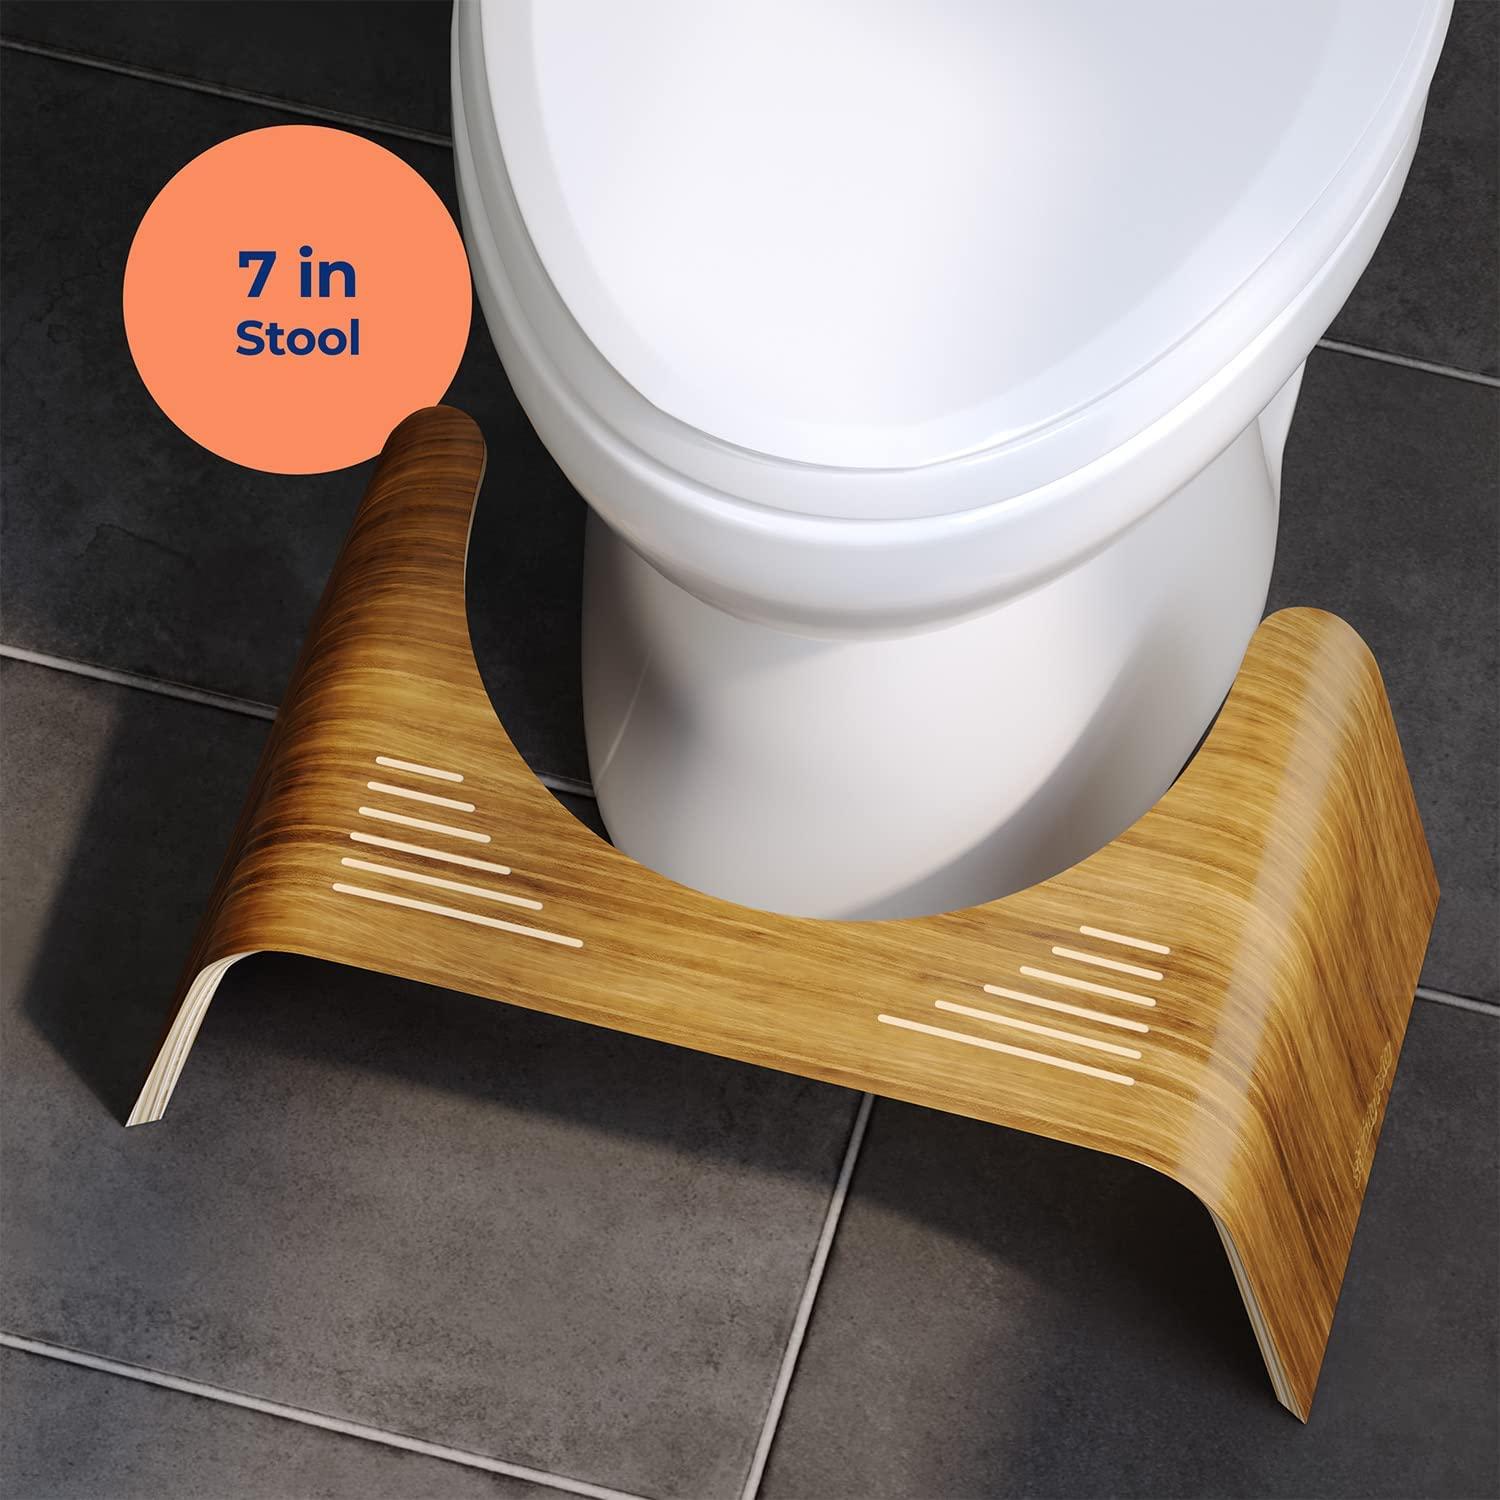 Squatty Potty The Original Bathroom Toilet Stool - Slim Teak Finish, 7 inch  Height Brown